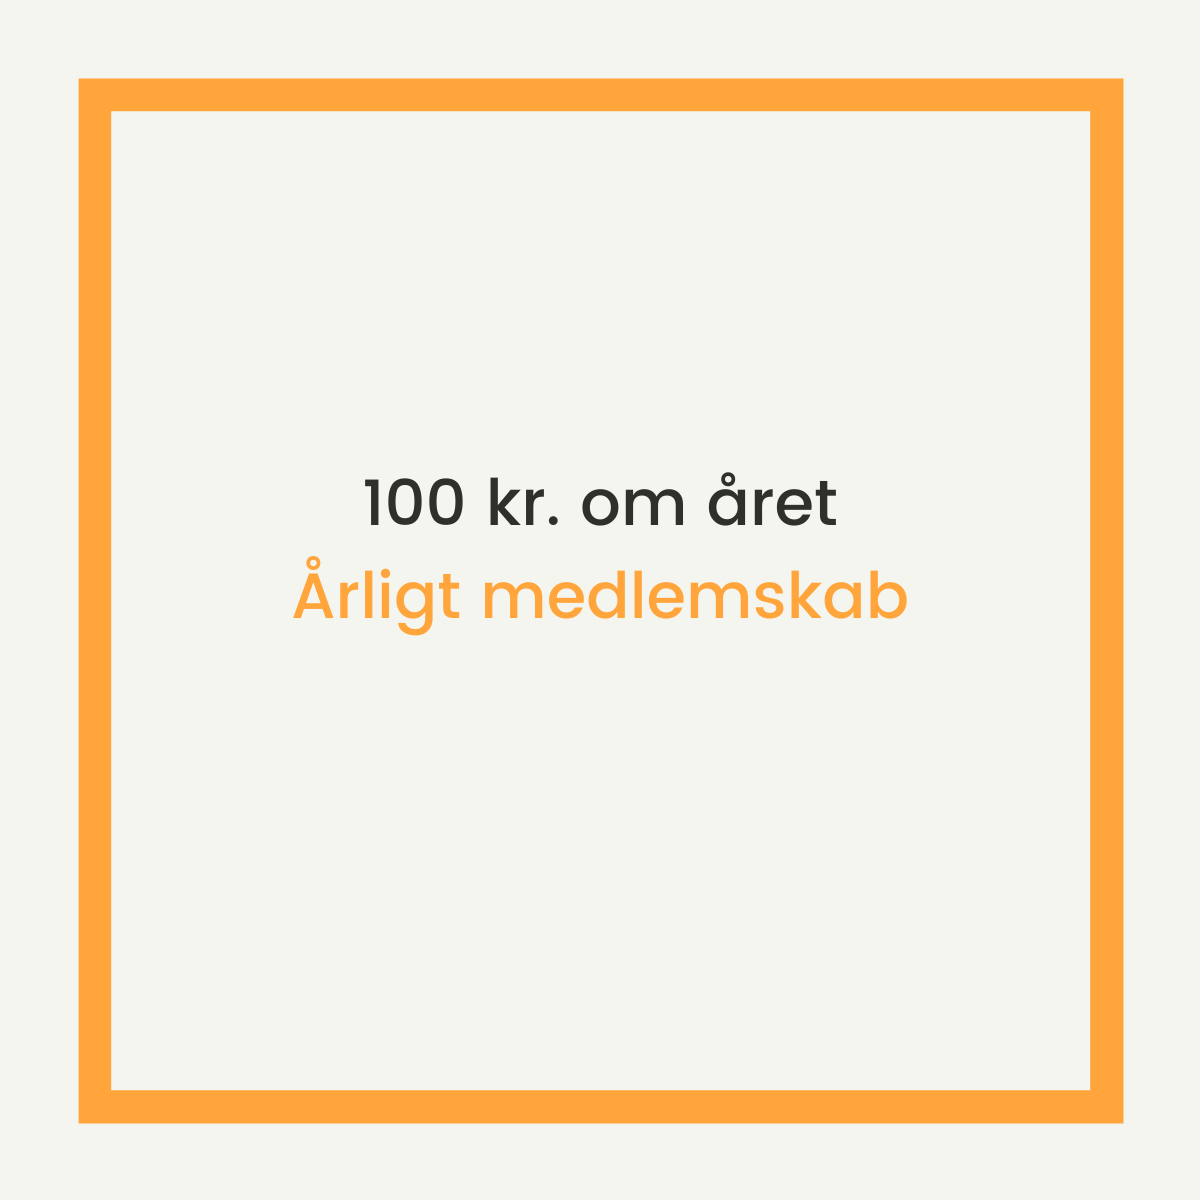 Annual membership (DKK 100 per year)